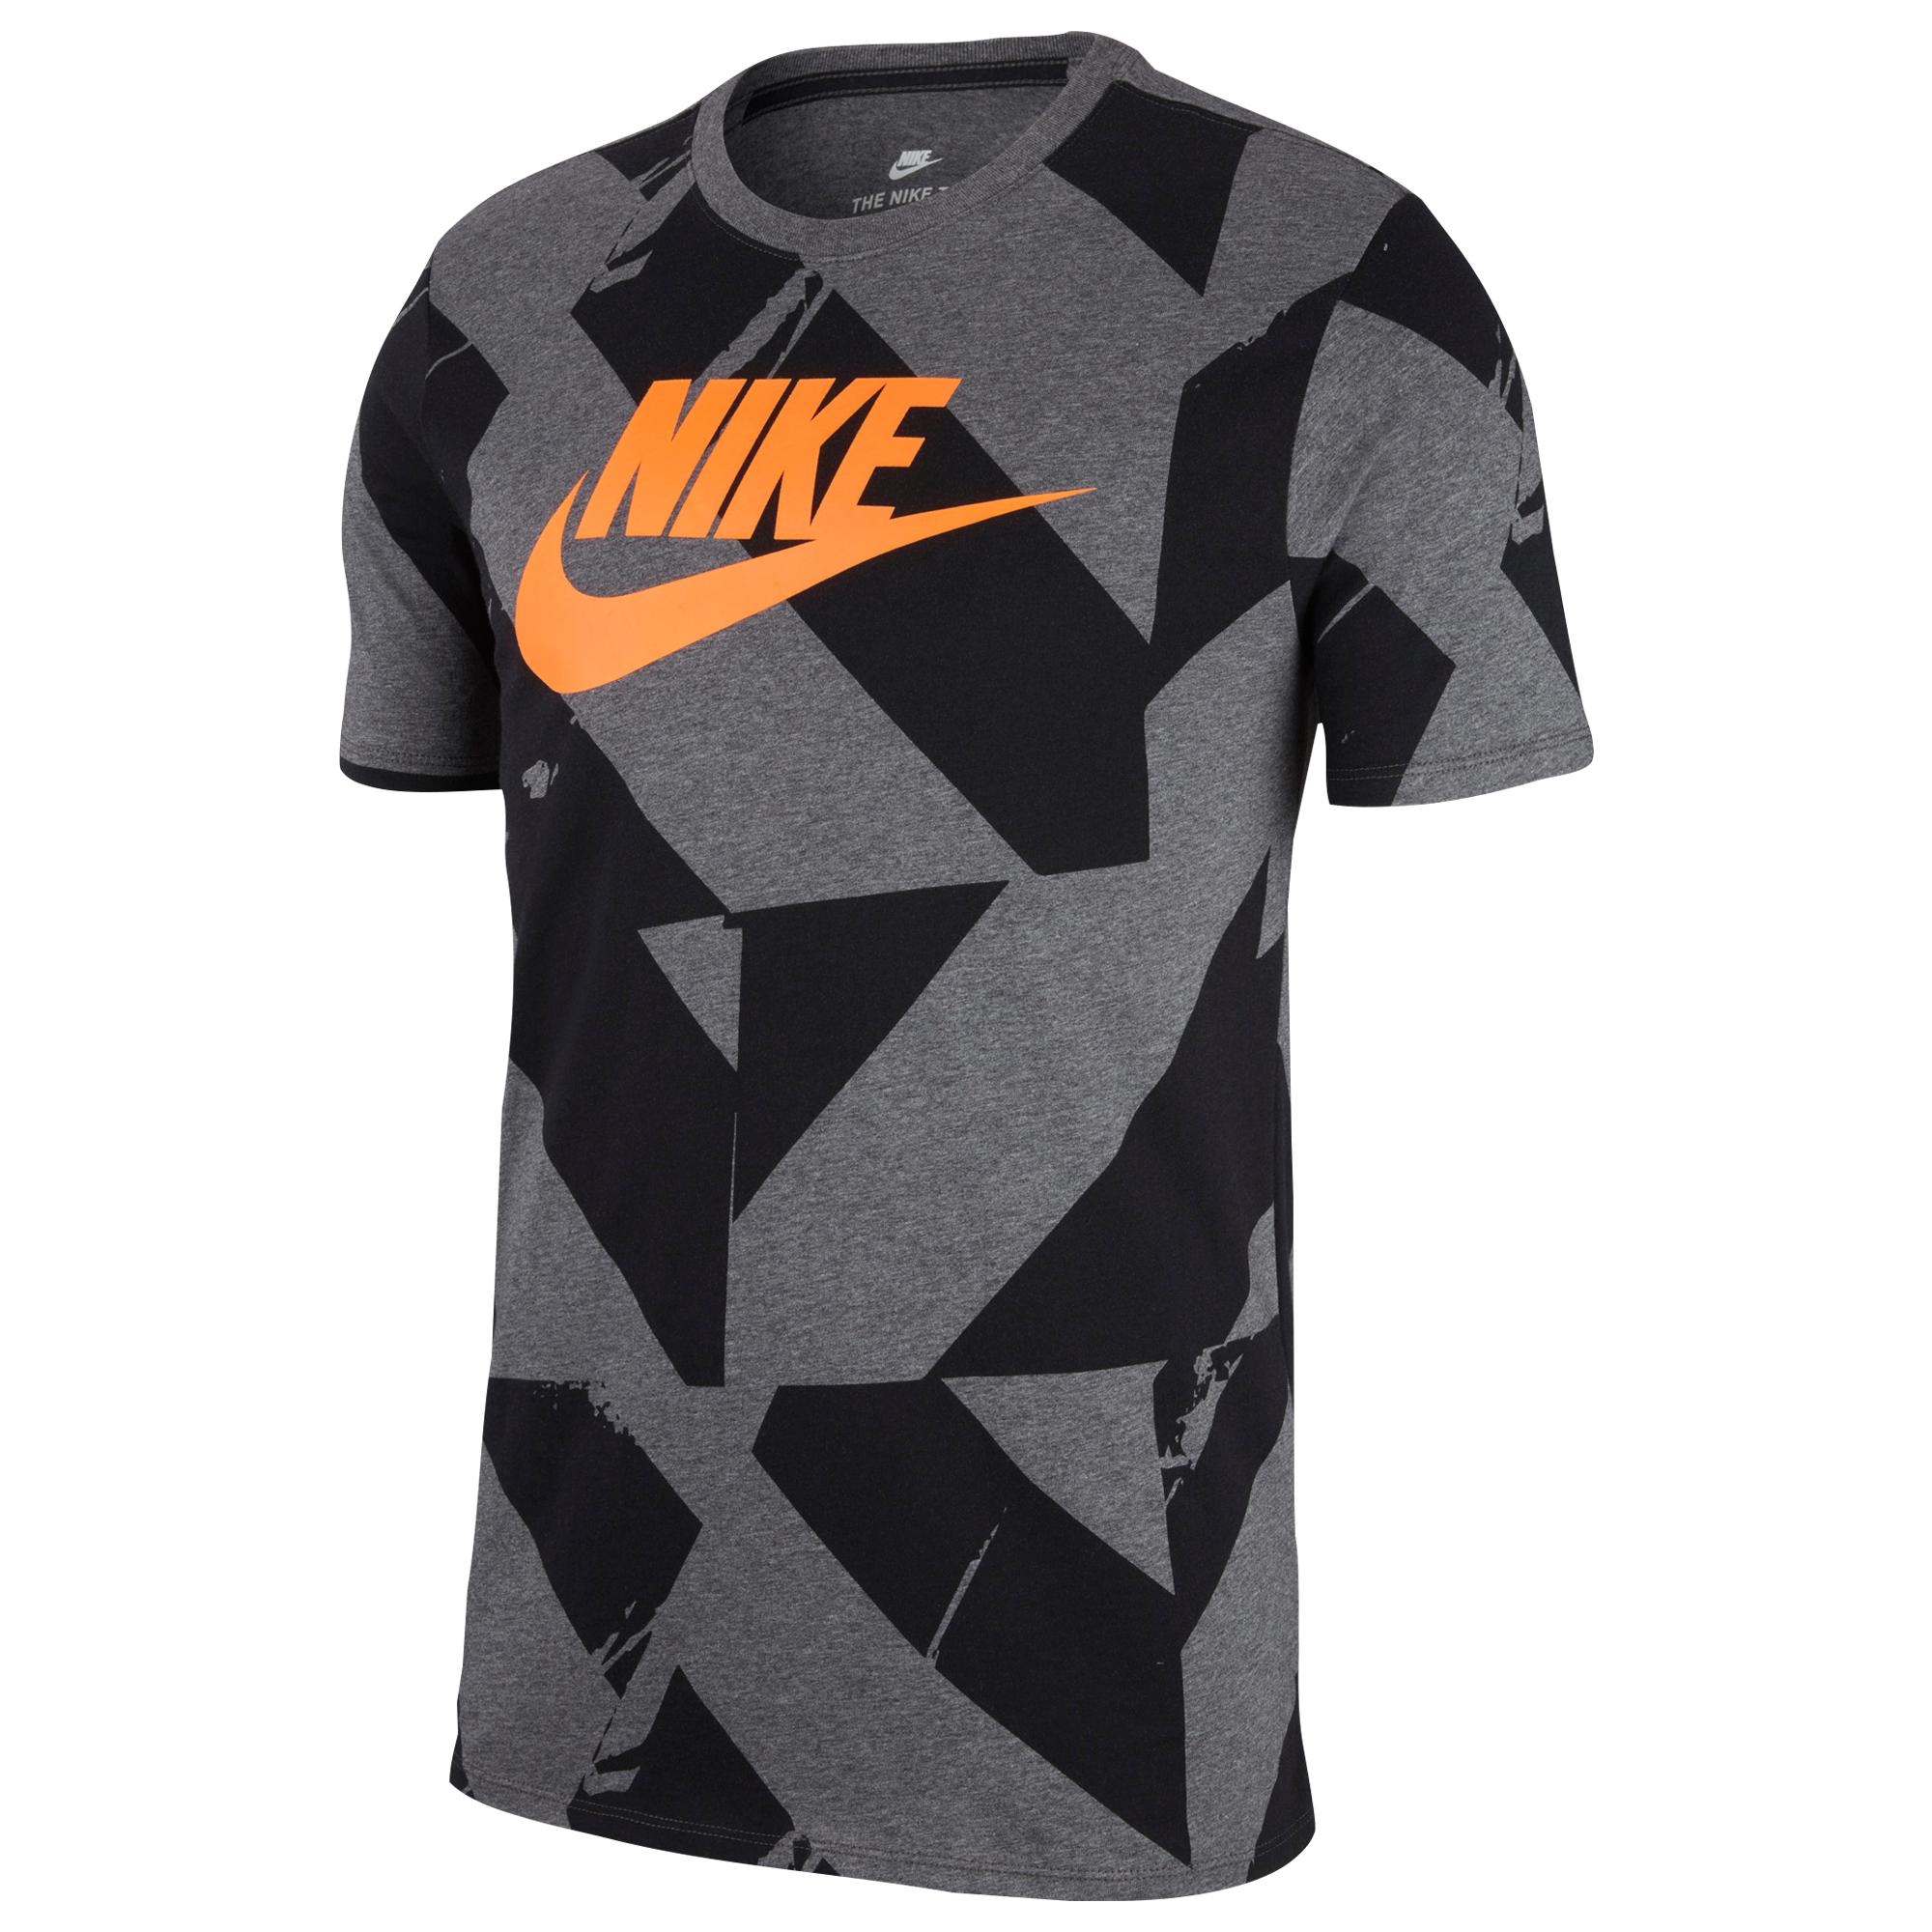 Nike Cotton Futura Hazard T-shirt in Black for Men - Lyst